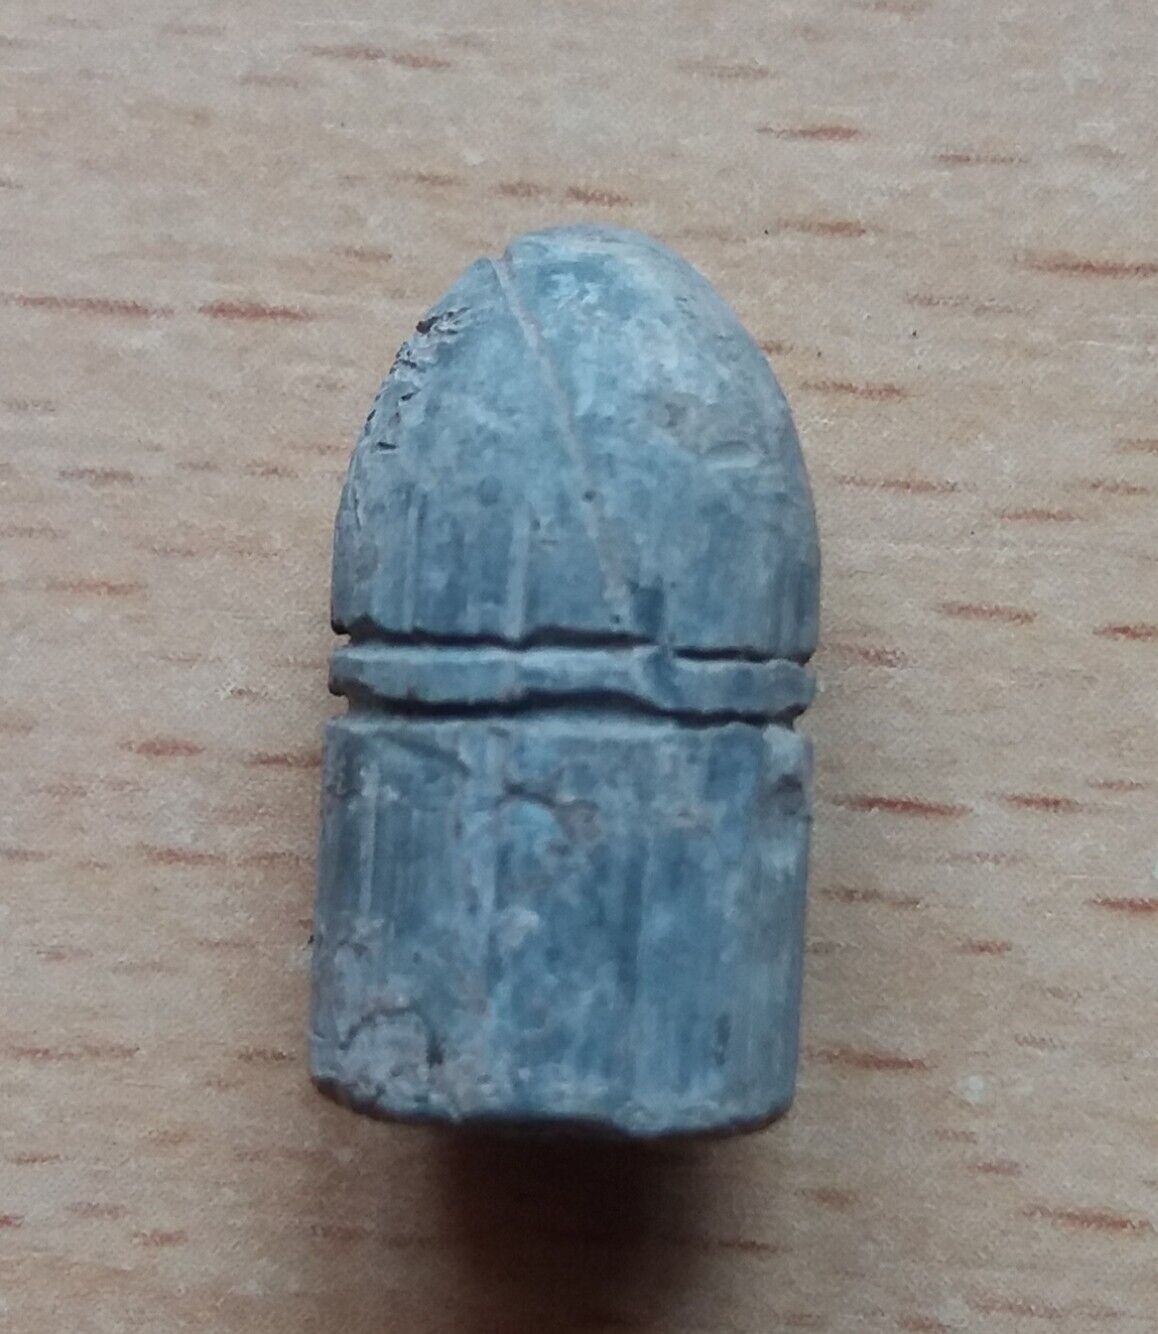 Dug Antique 19th century unknown bullet